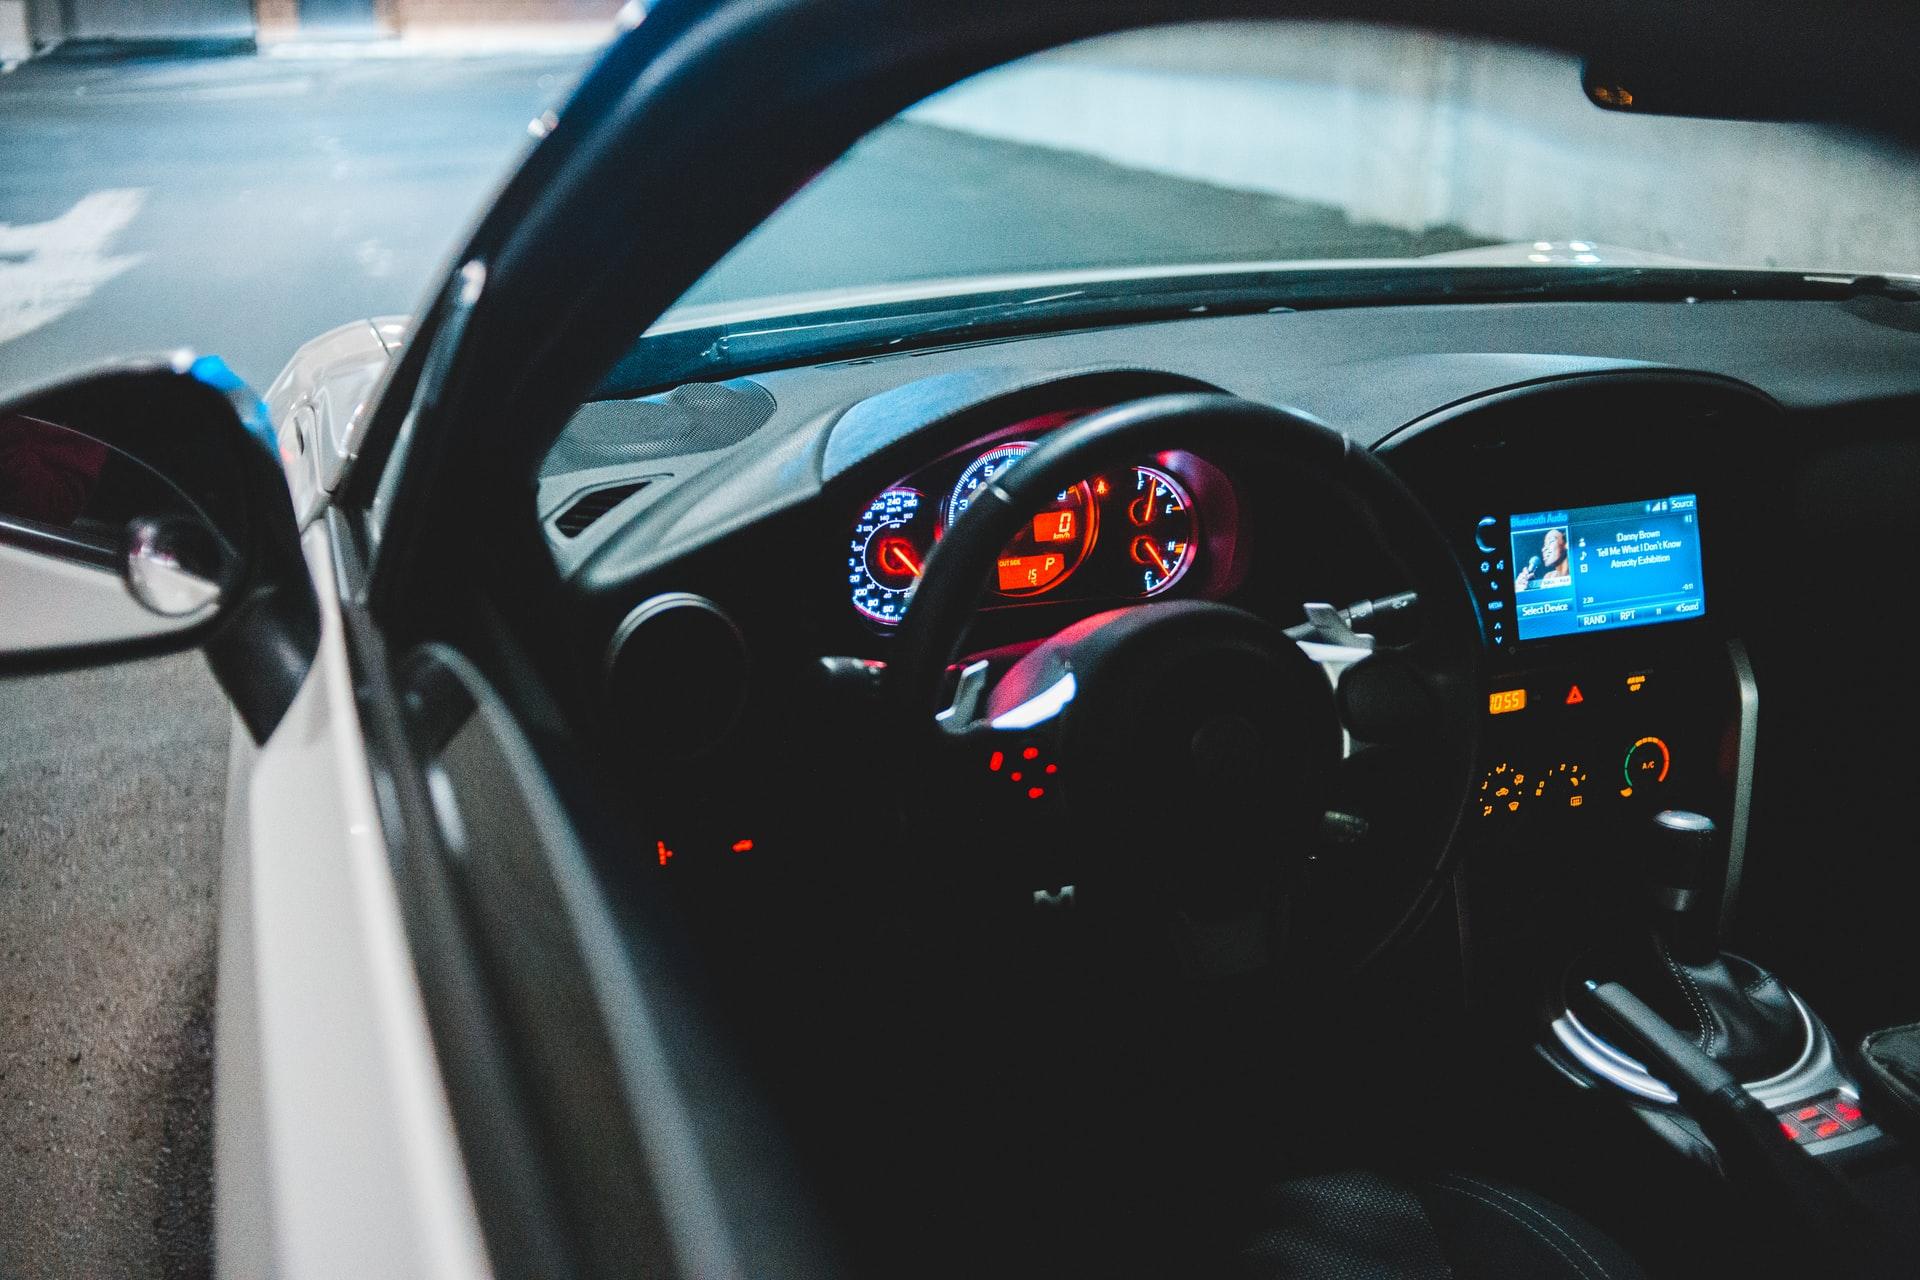 A view inside the driver’s side window of a parked autonomous car.